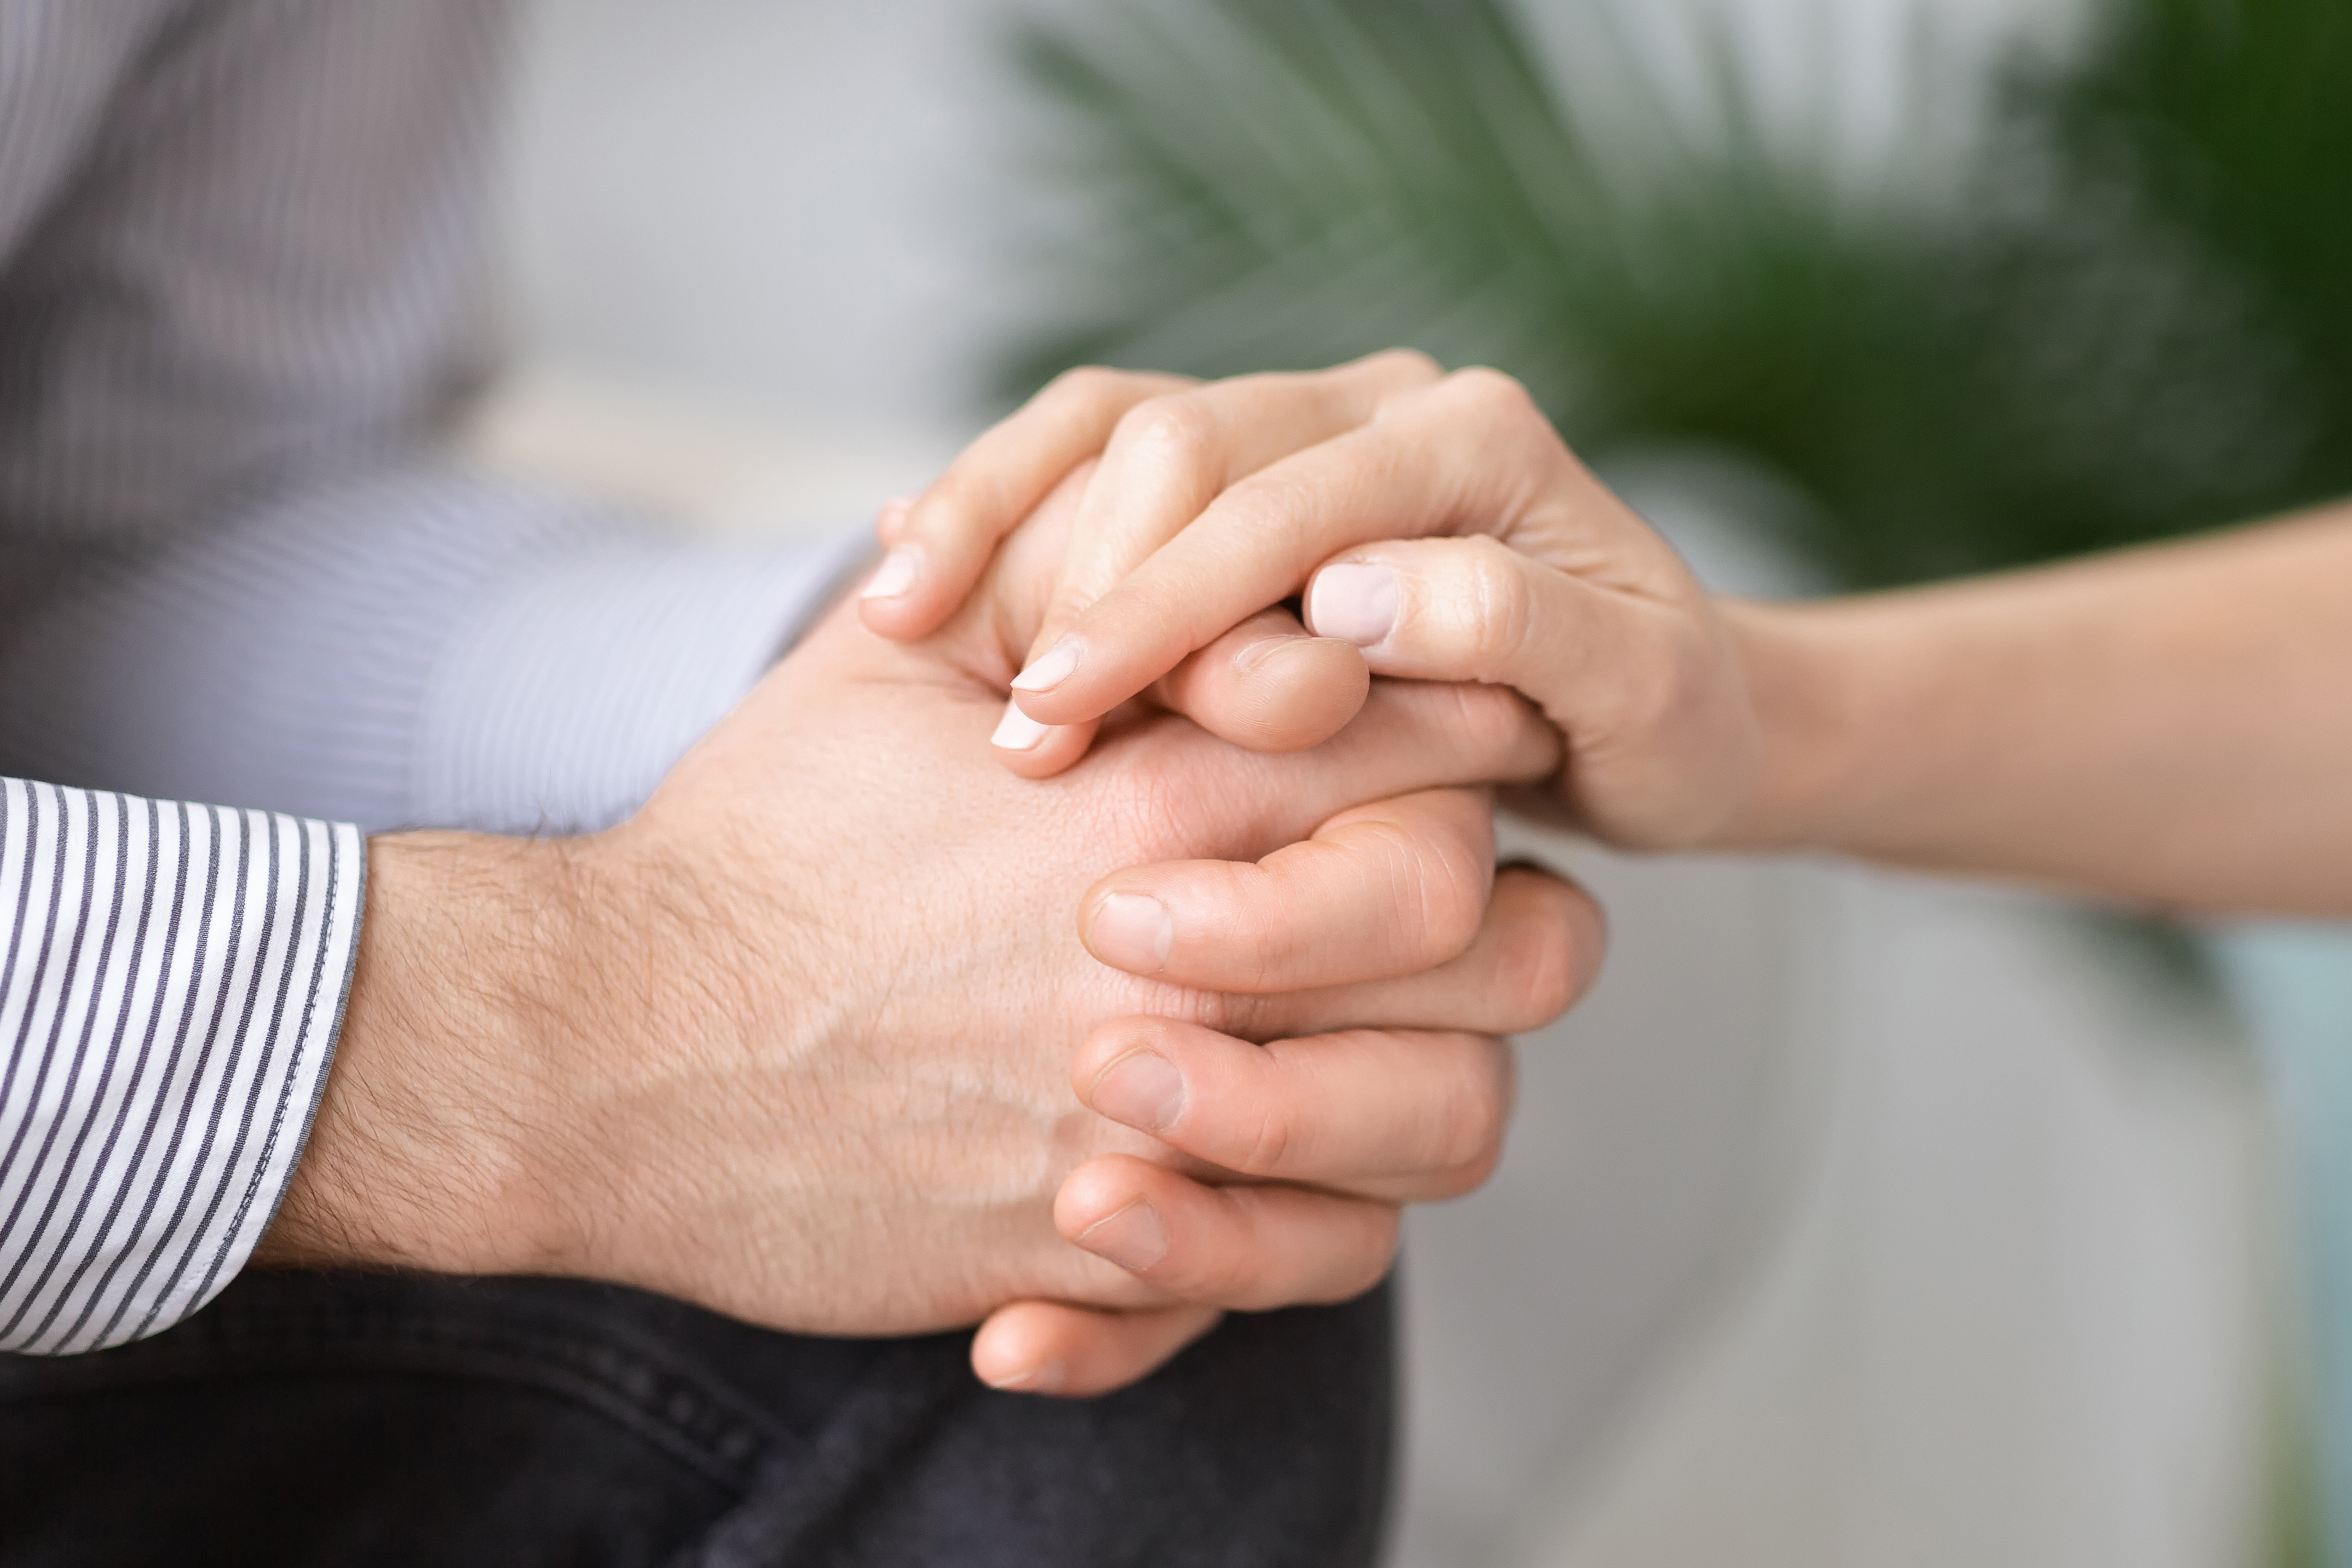 Verheiratetes Paar hält sich an den Händen | Quelle: Shutterstock